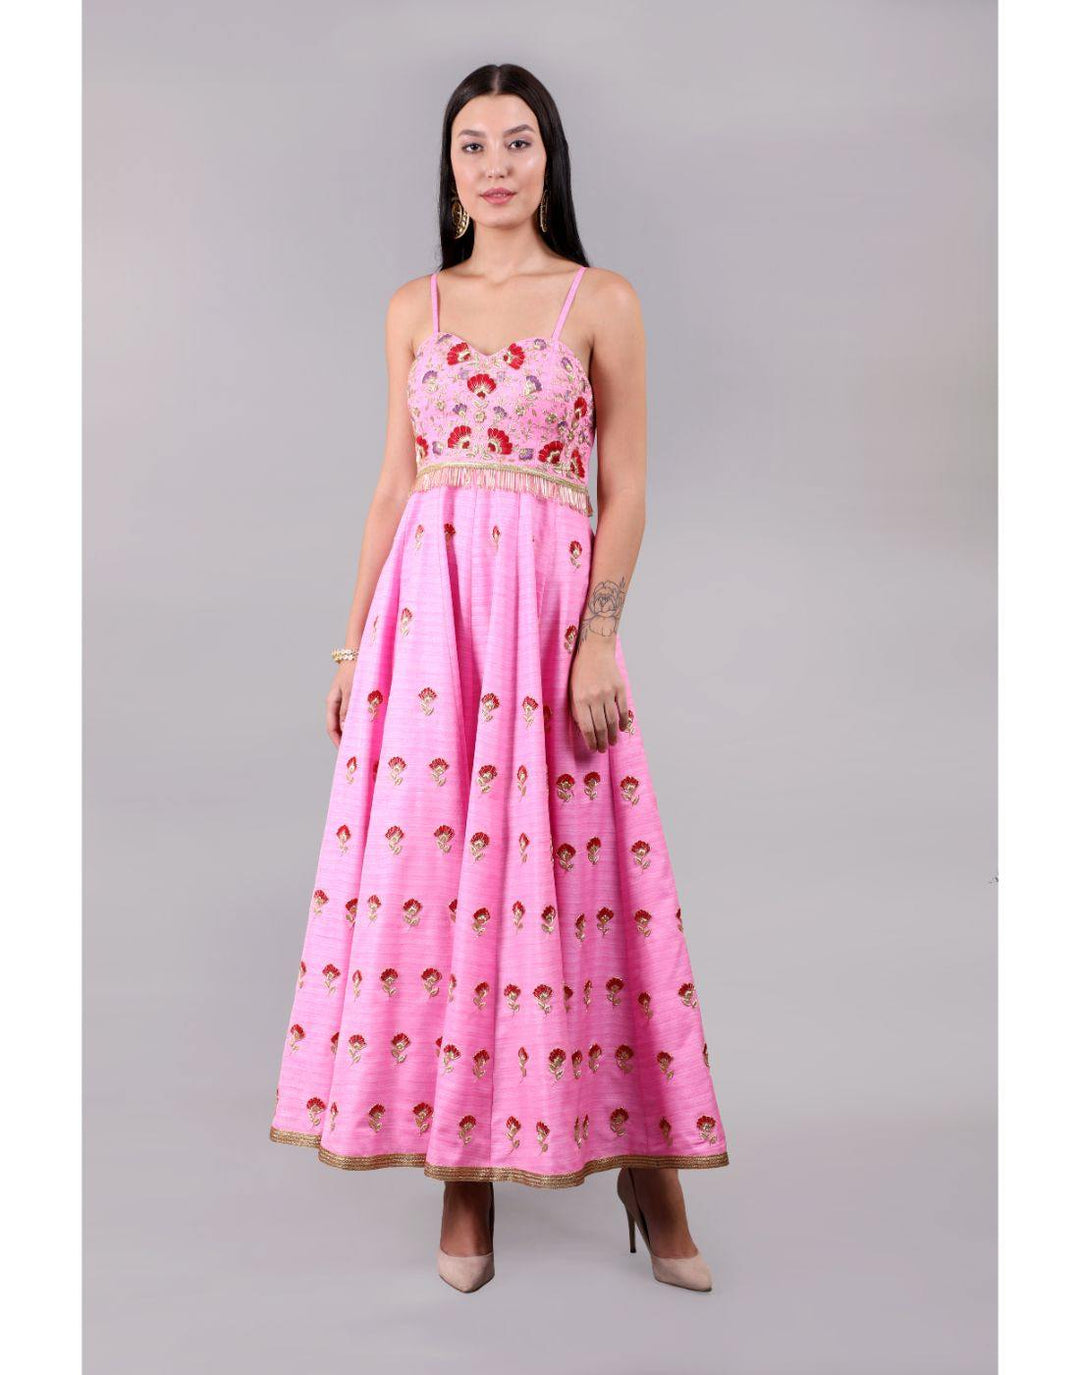 Blush Pink Ruffles Ball Gown Criss-cross Backless Prom Dresses,PD0304 –  AlineBridal